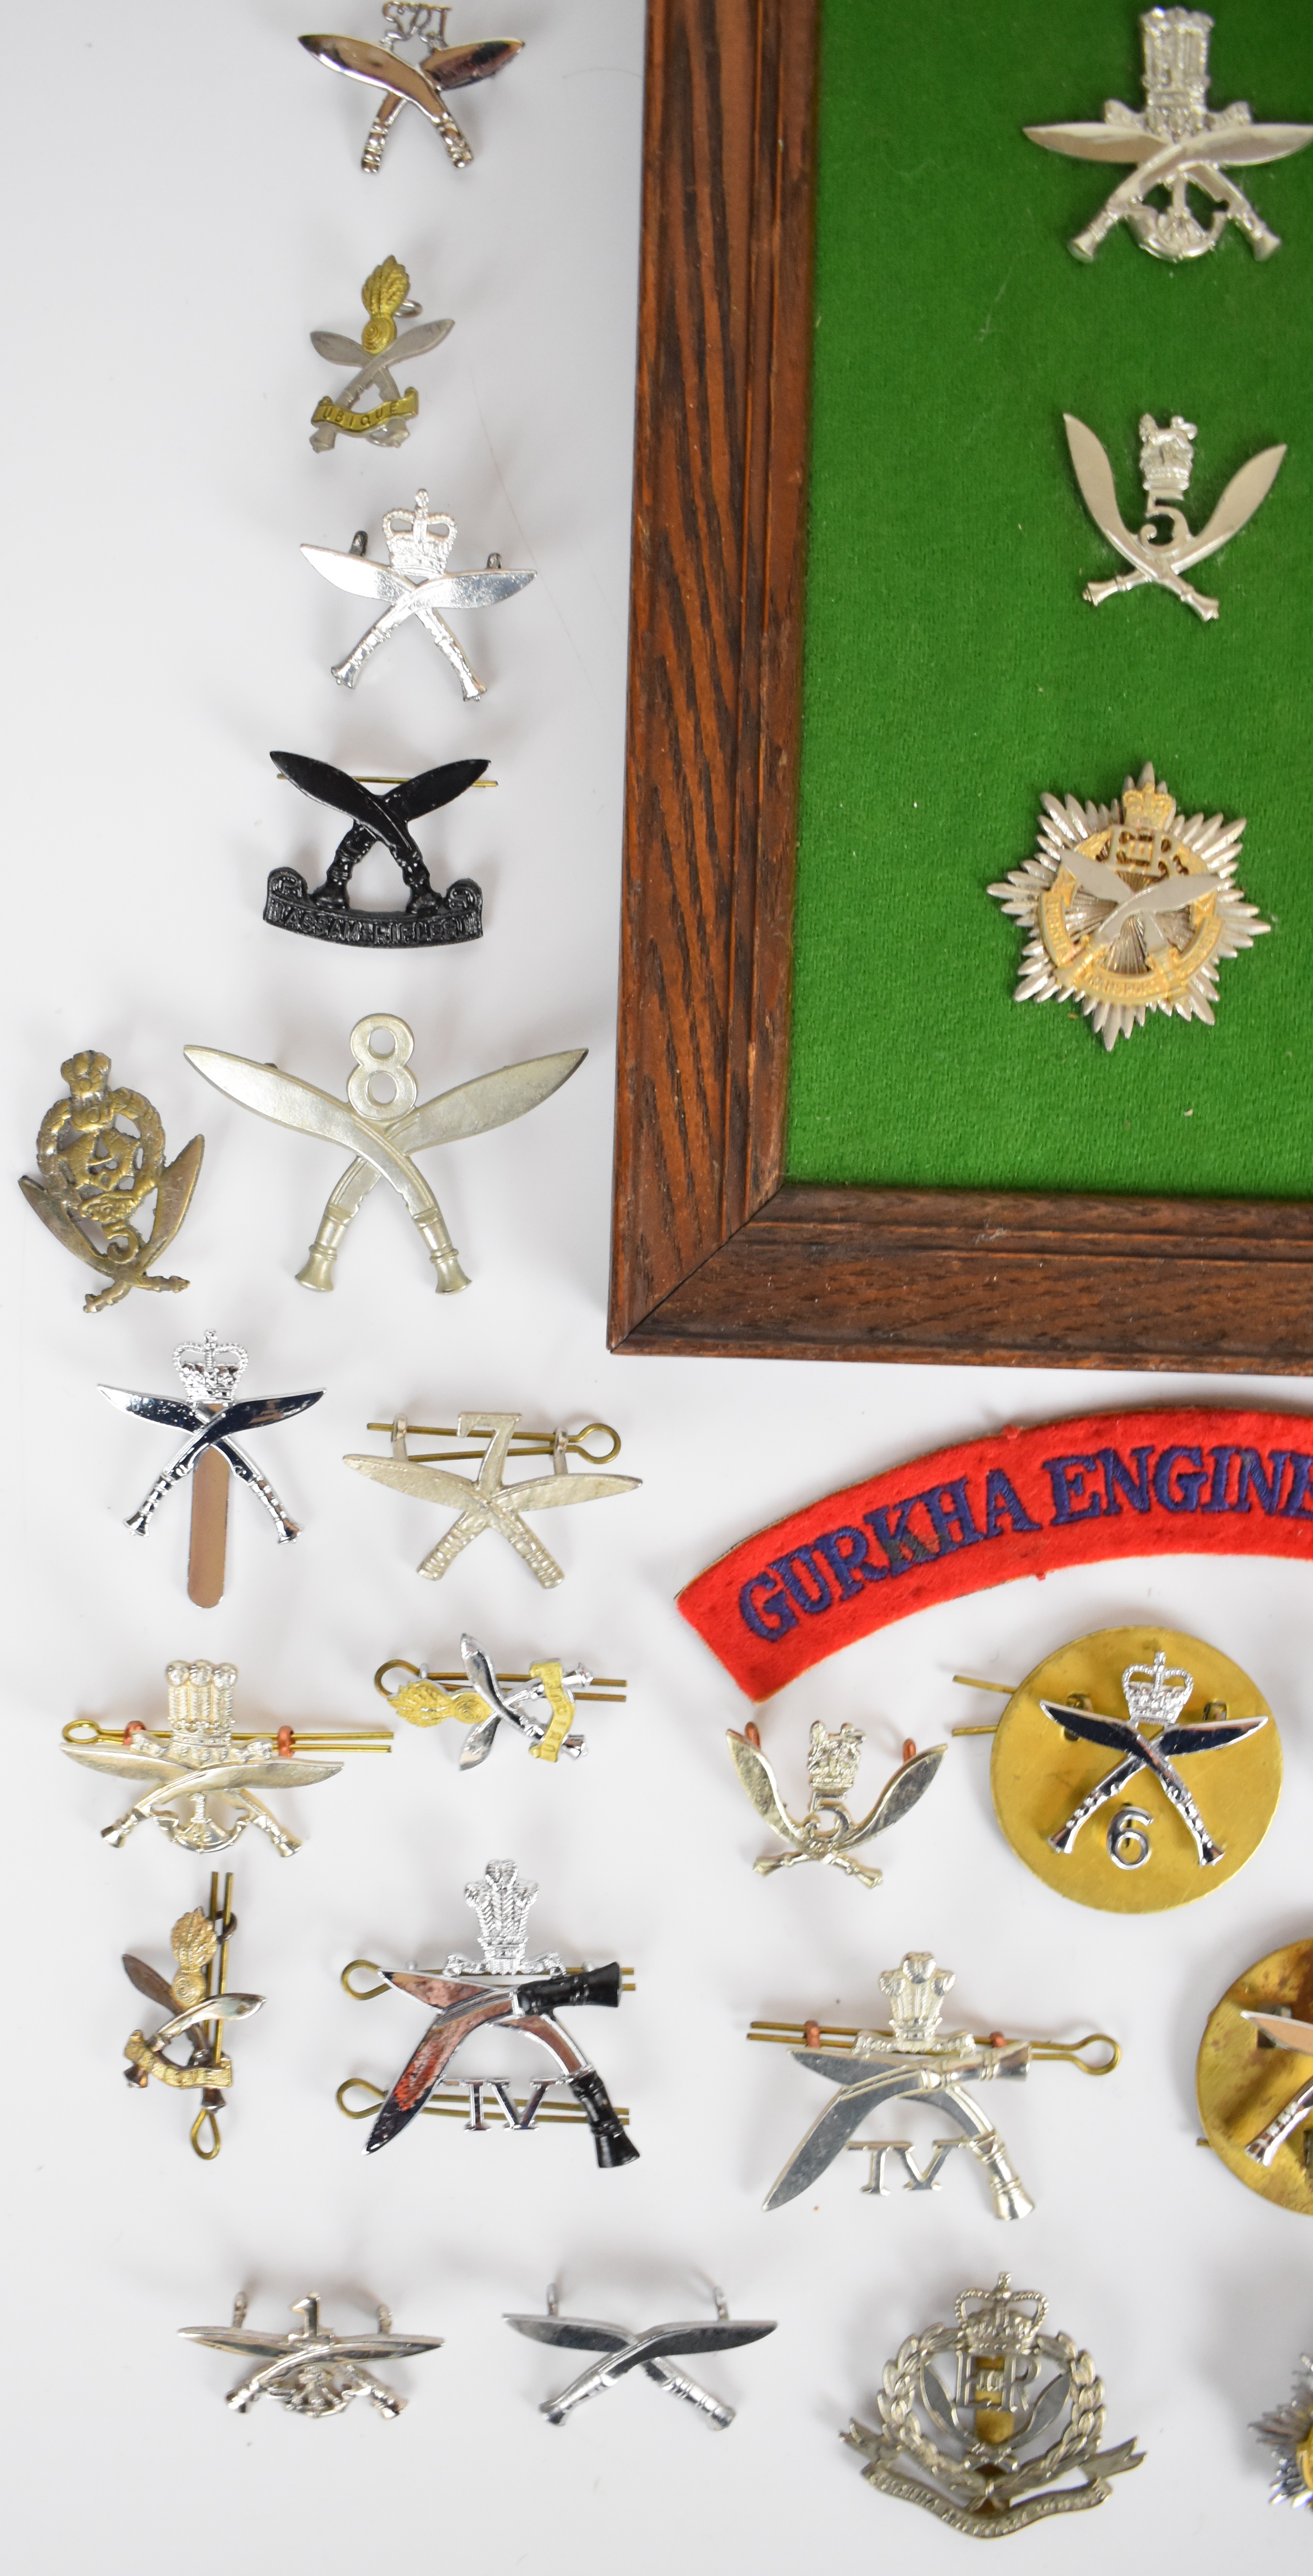 Collection of approximately 50 British Army Gurkha Regiment badges including Transport Regiment, - Image 4 of 5